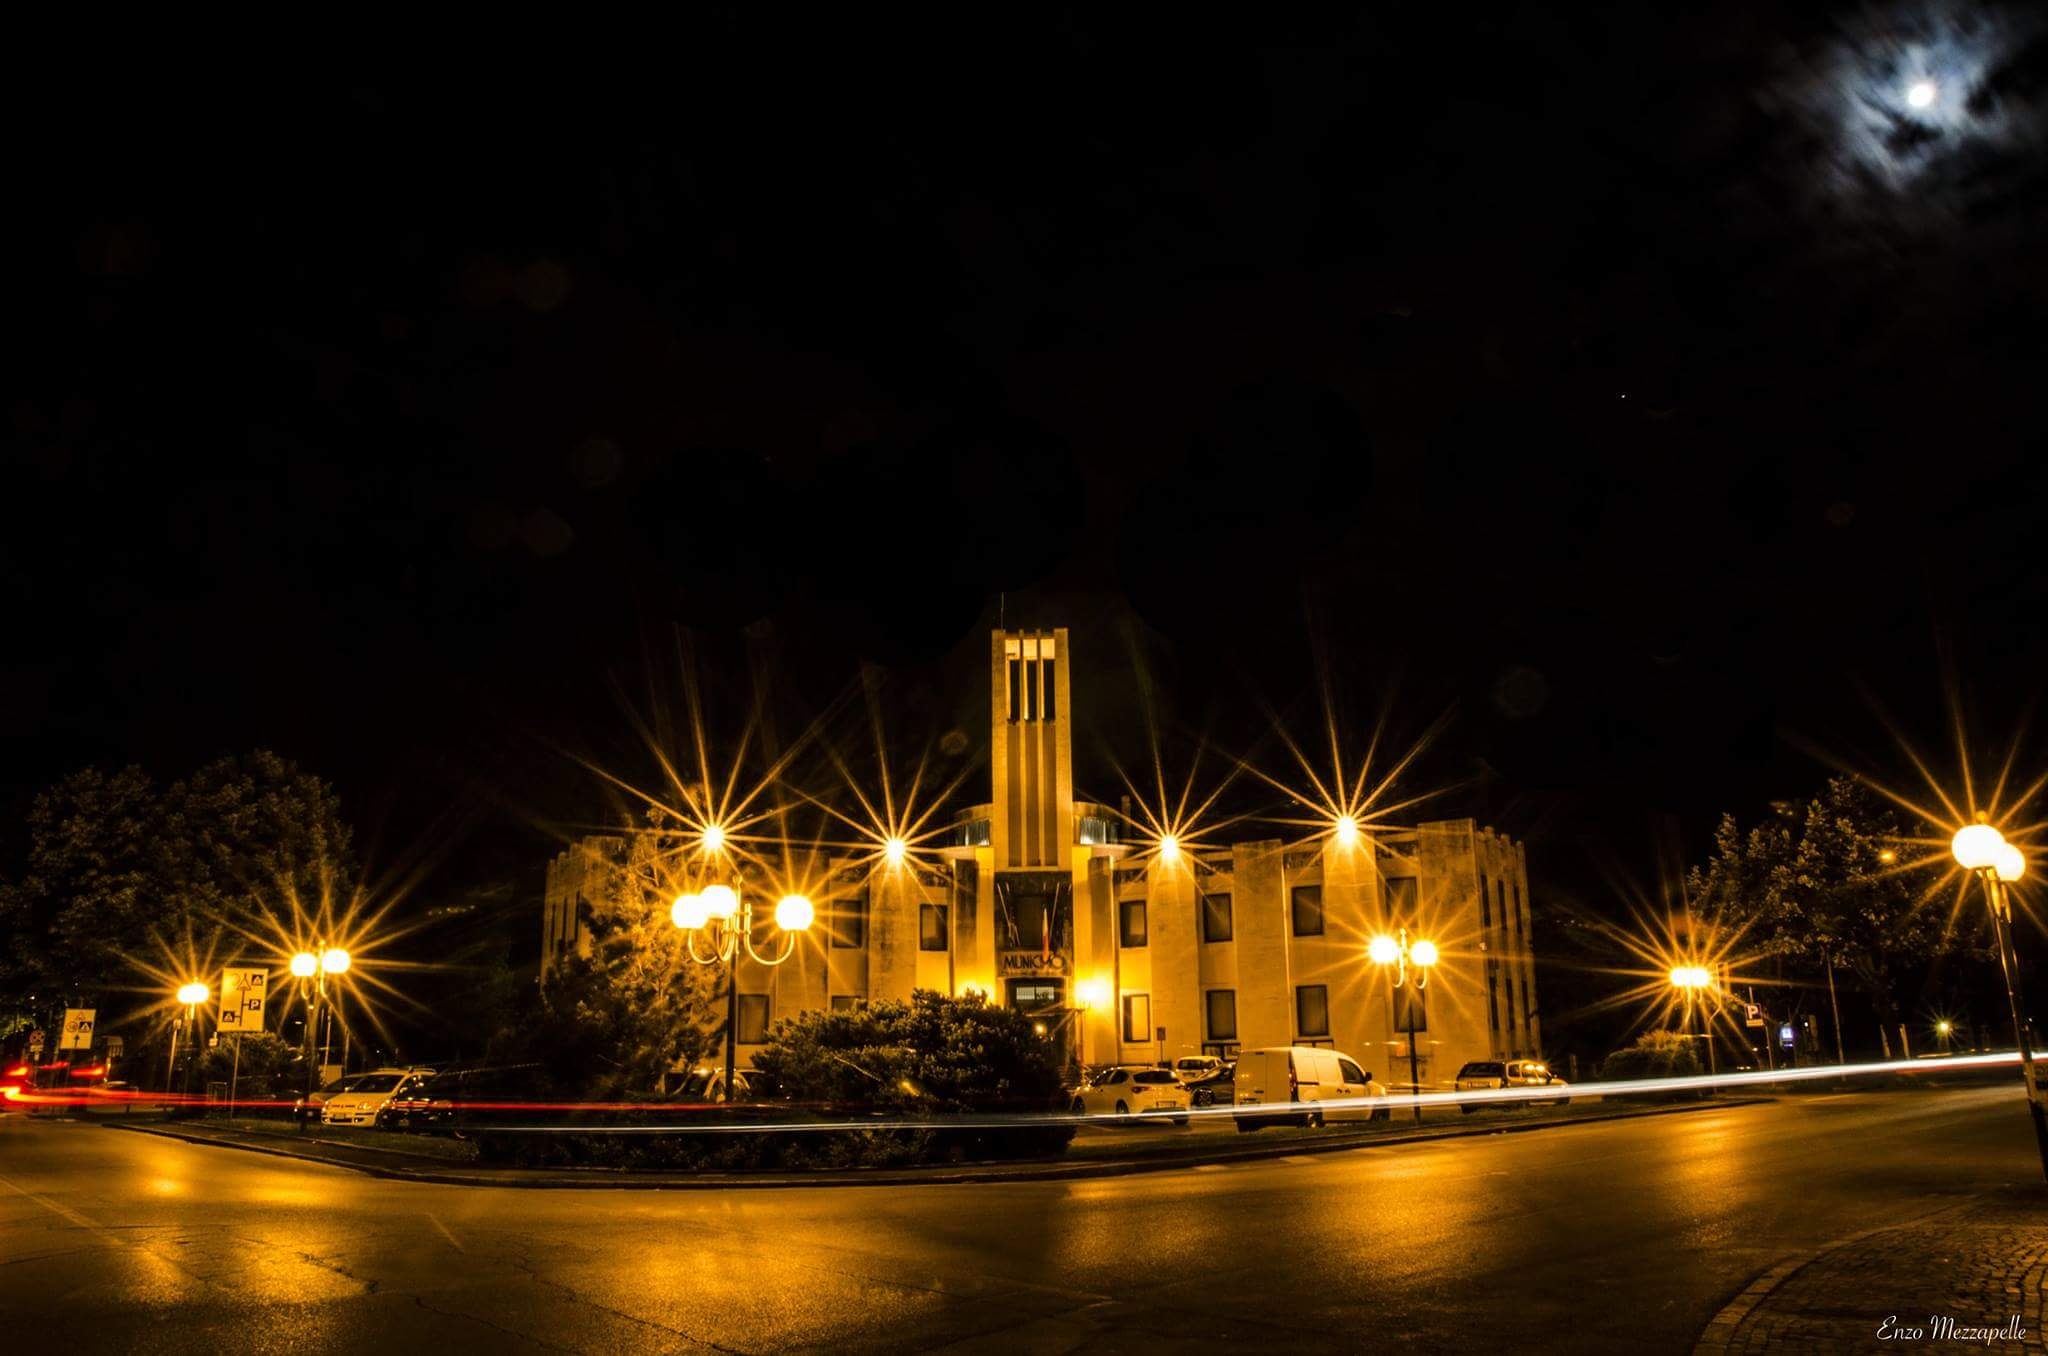 Molinella by night City Hall...